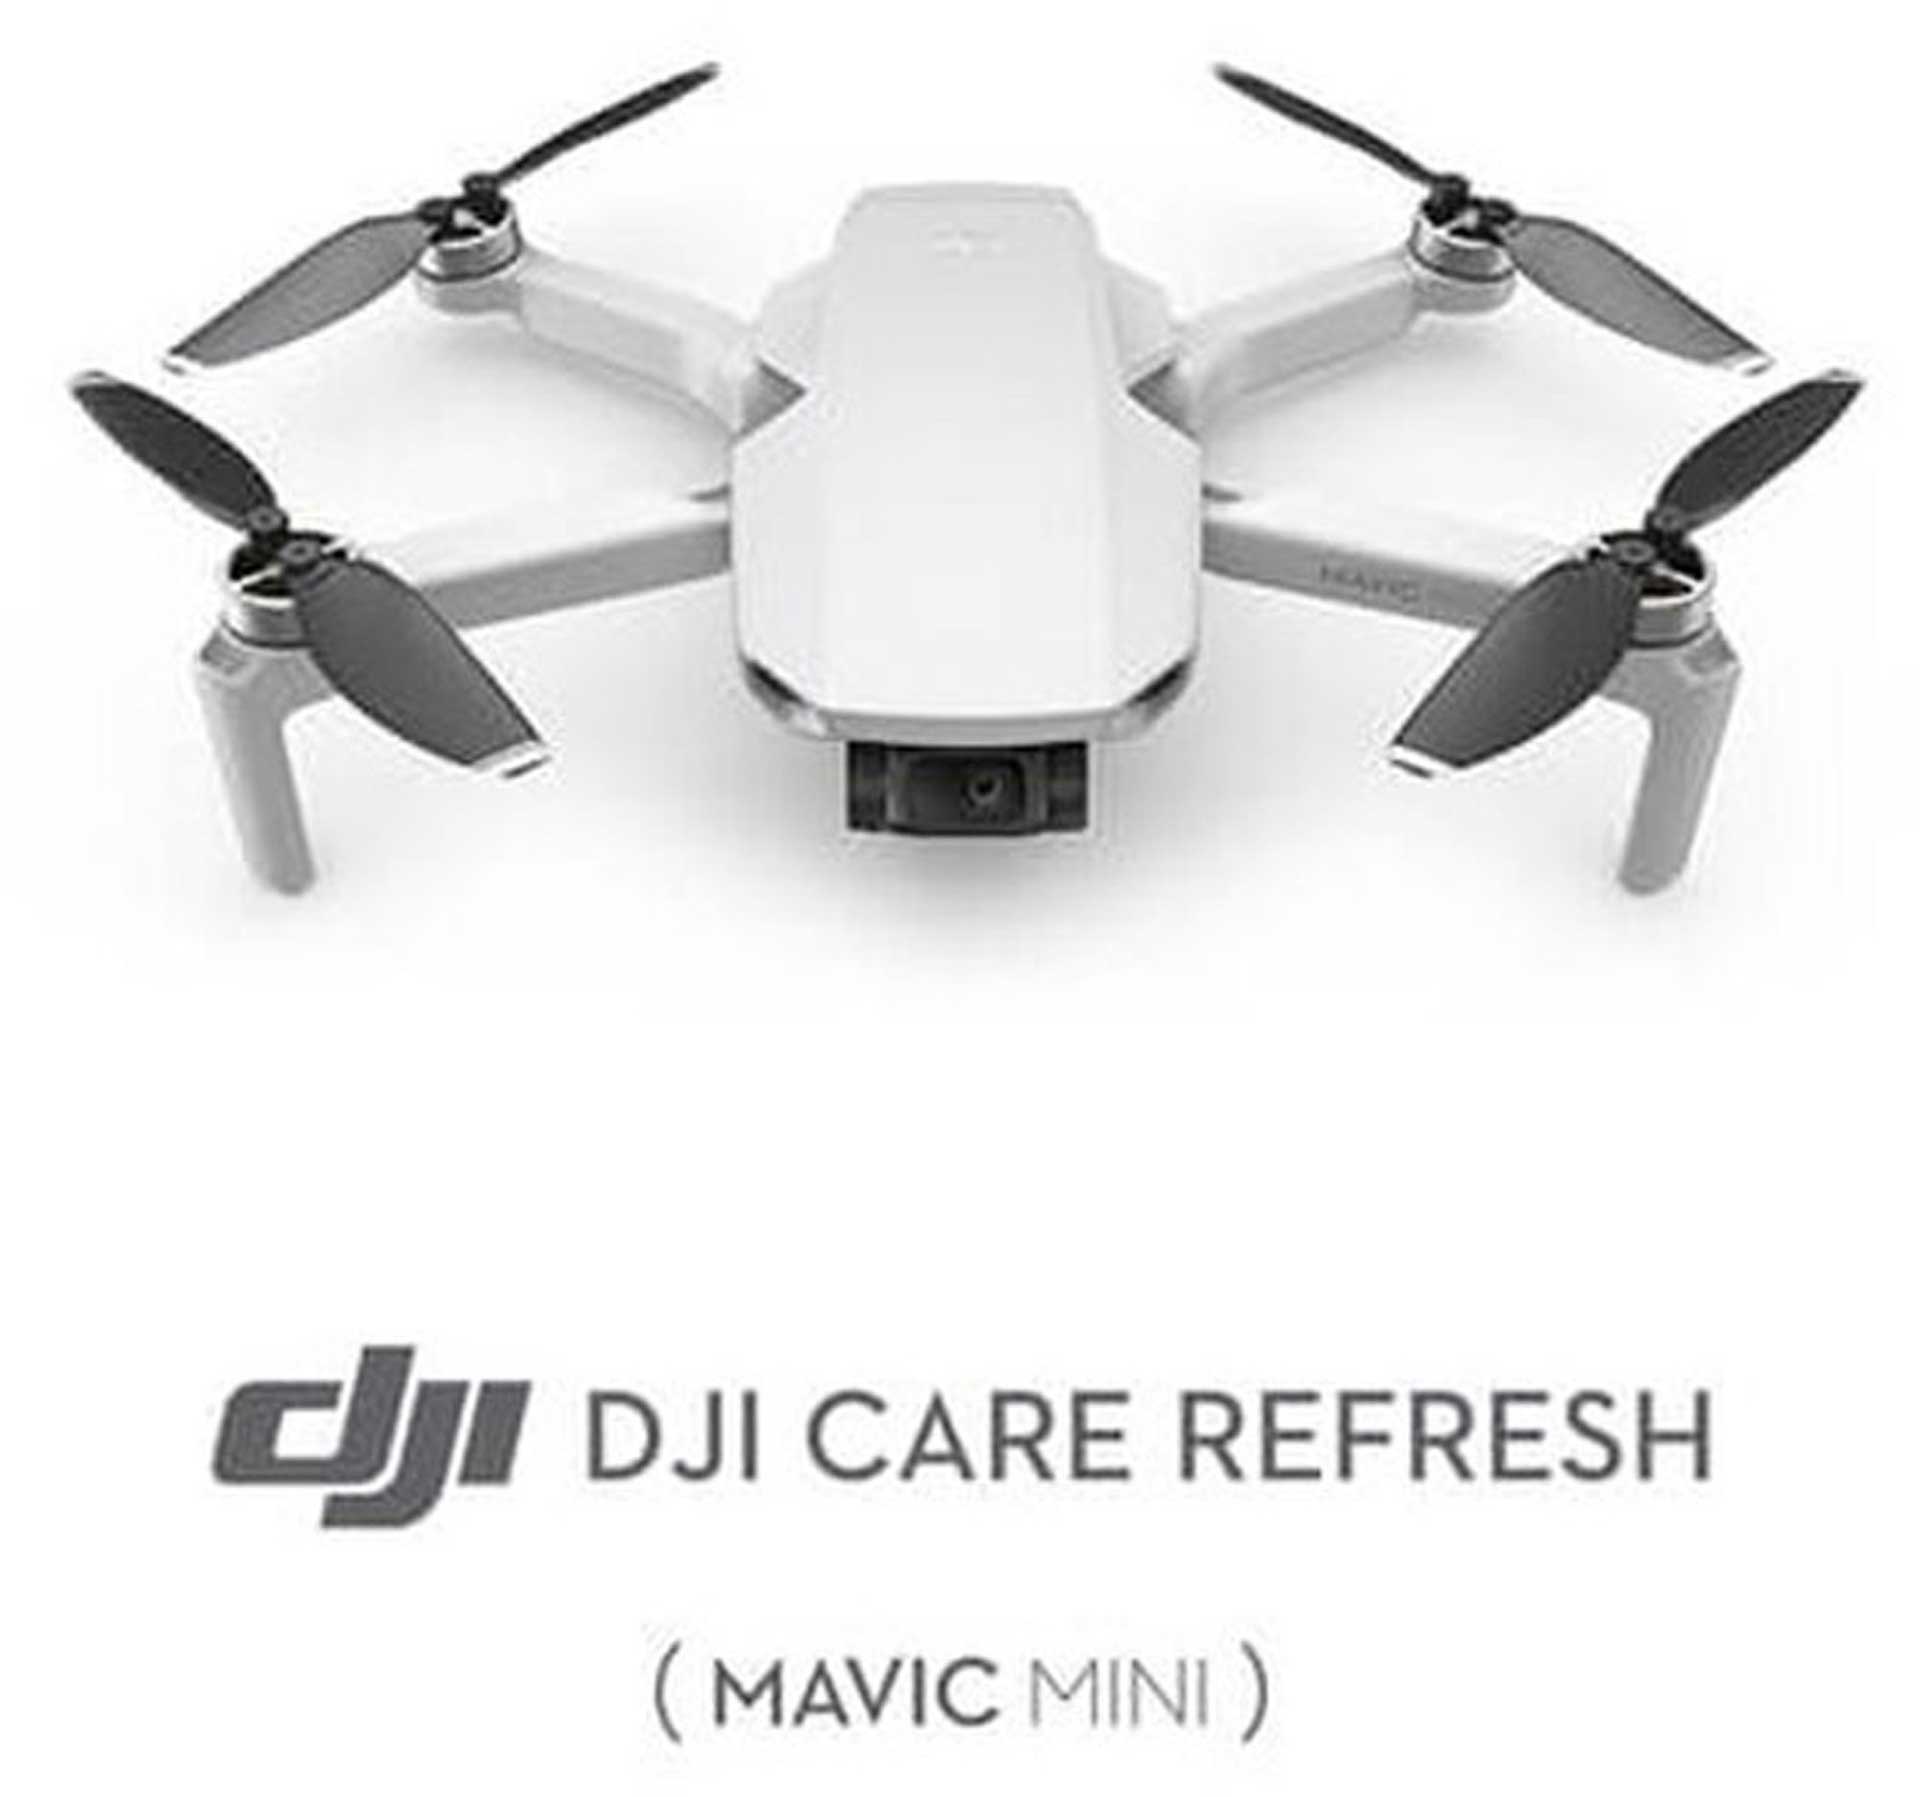 DJI CARE REFRESH (MAVIC MINI) (Drohne nicht im Lieferumfang enthalten!!)